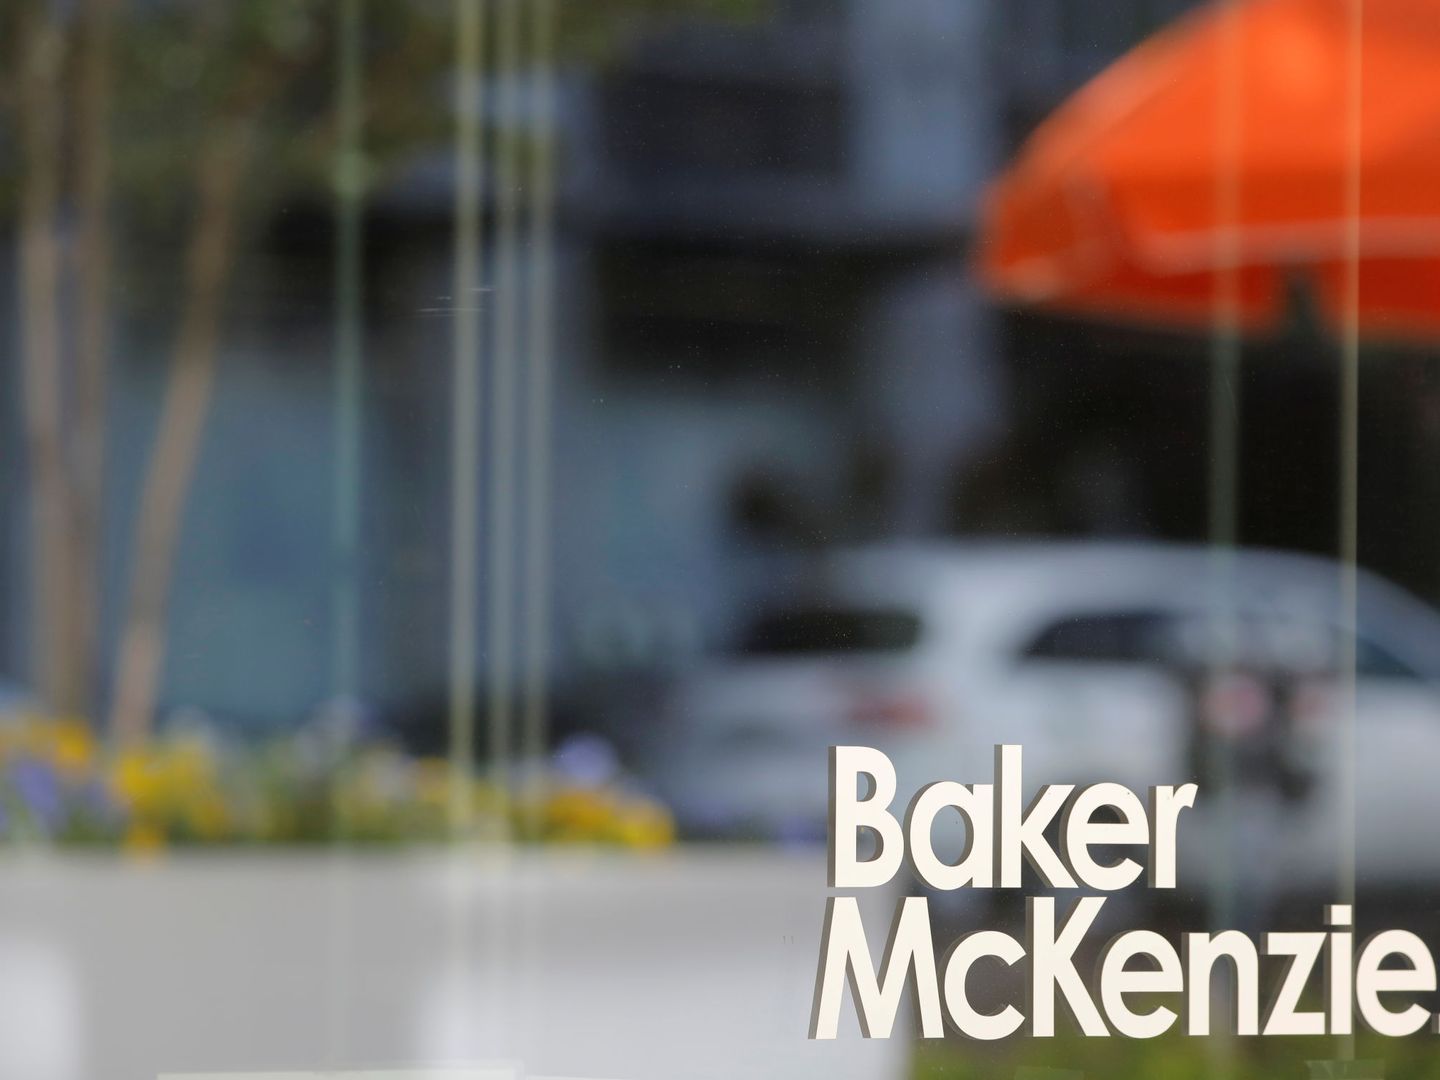 Logo del despacho de abogados Baker McKenzie. (Reuters)